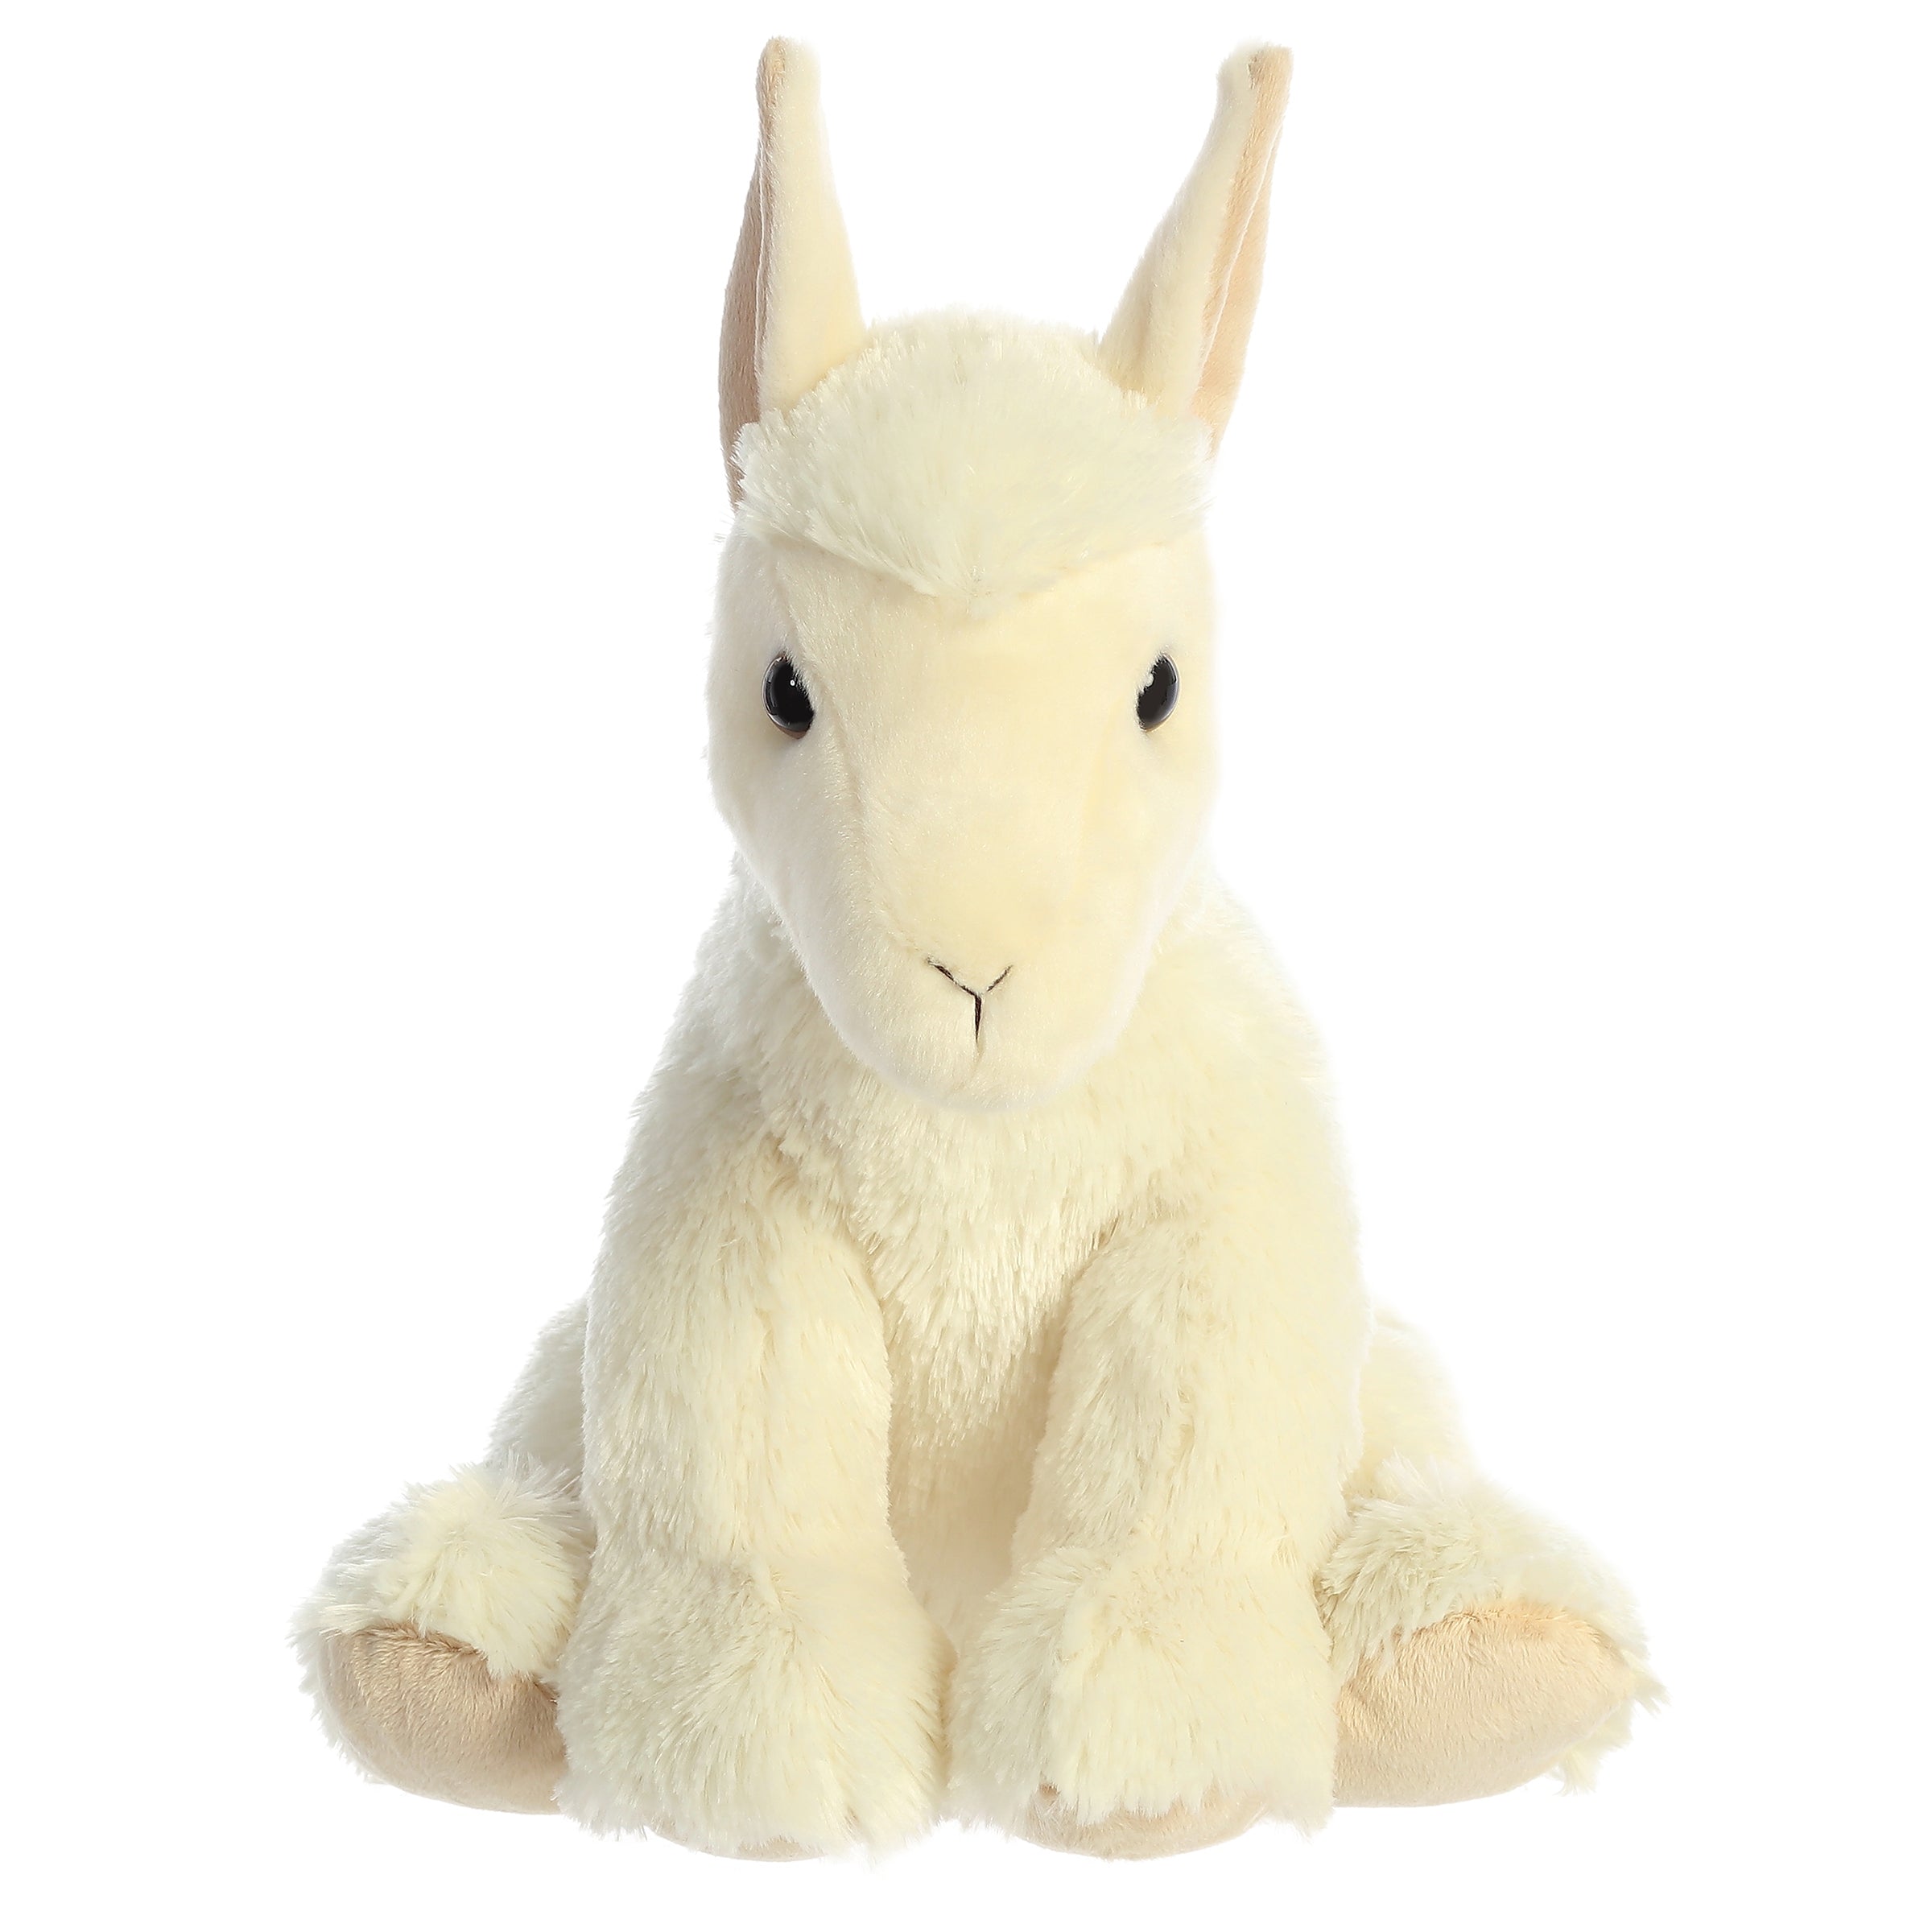 Aurora stuffed animal serene Andes Llama Plush with creamy fur, perky ears, and friendly eyes, epitomizing gentleness.